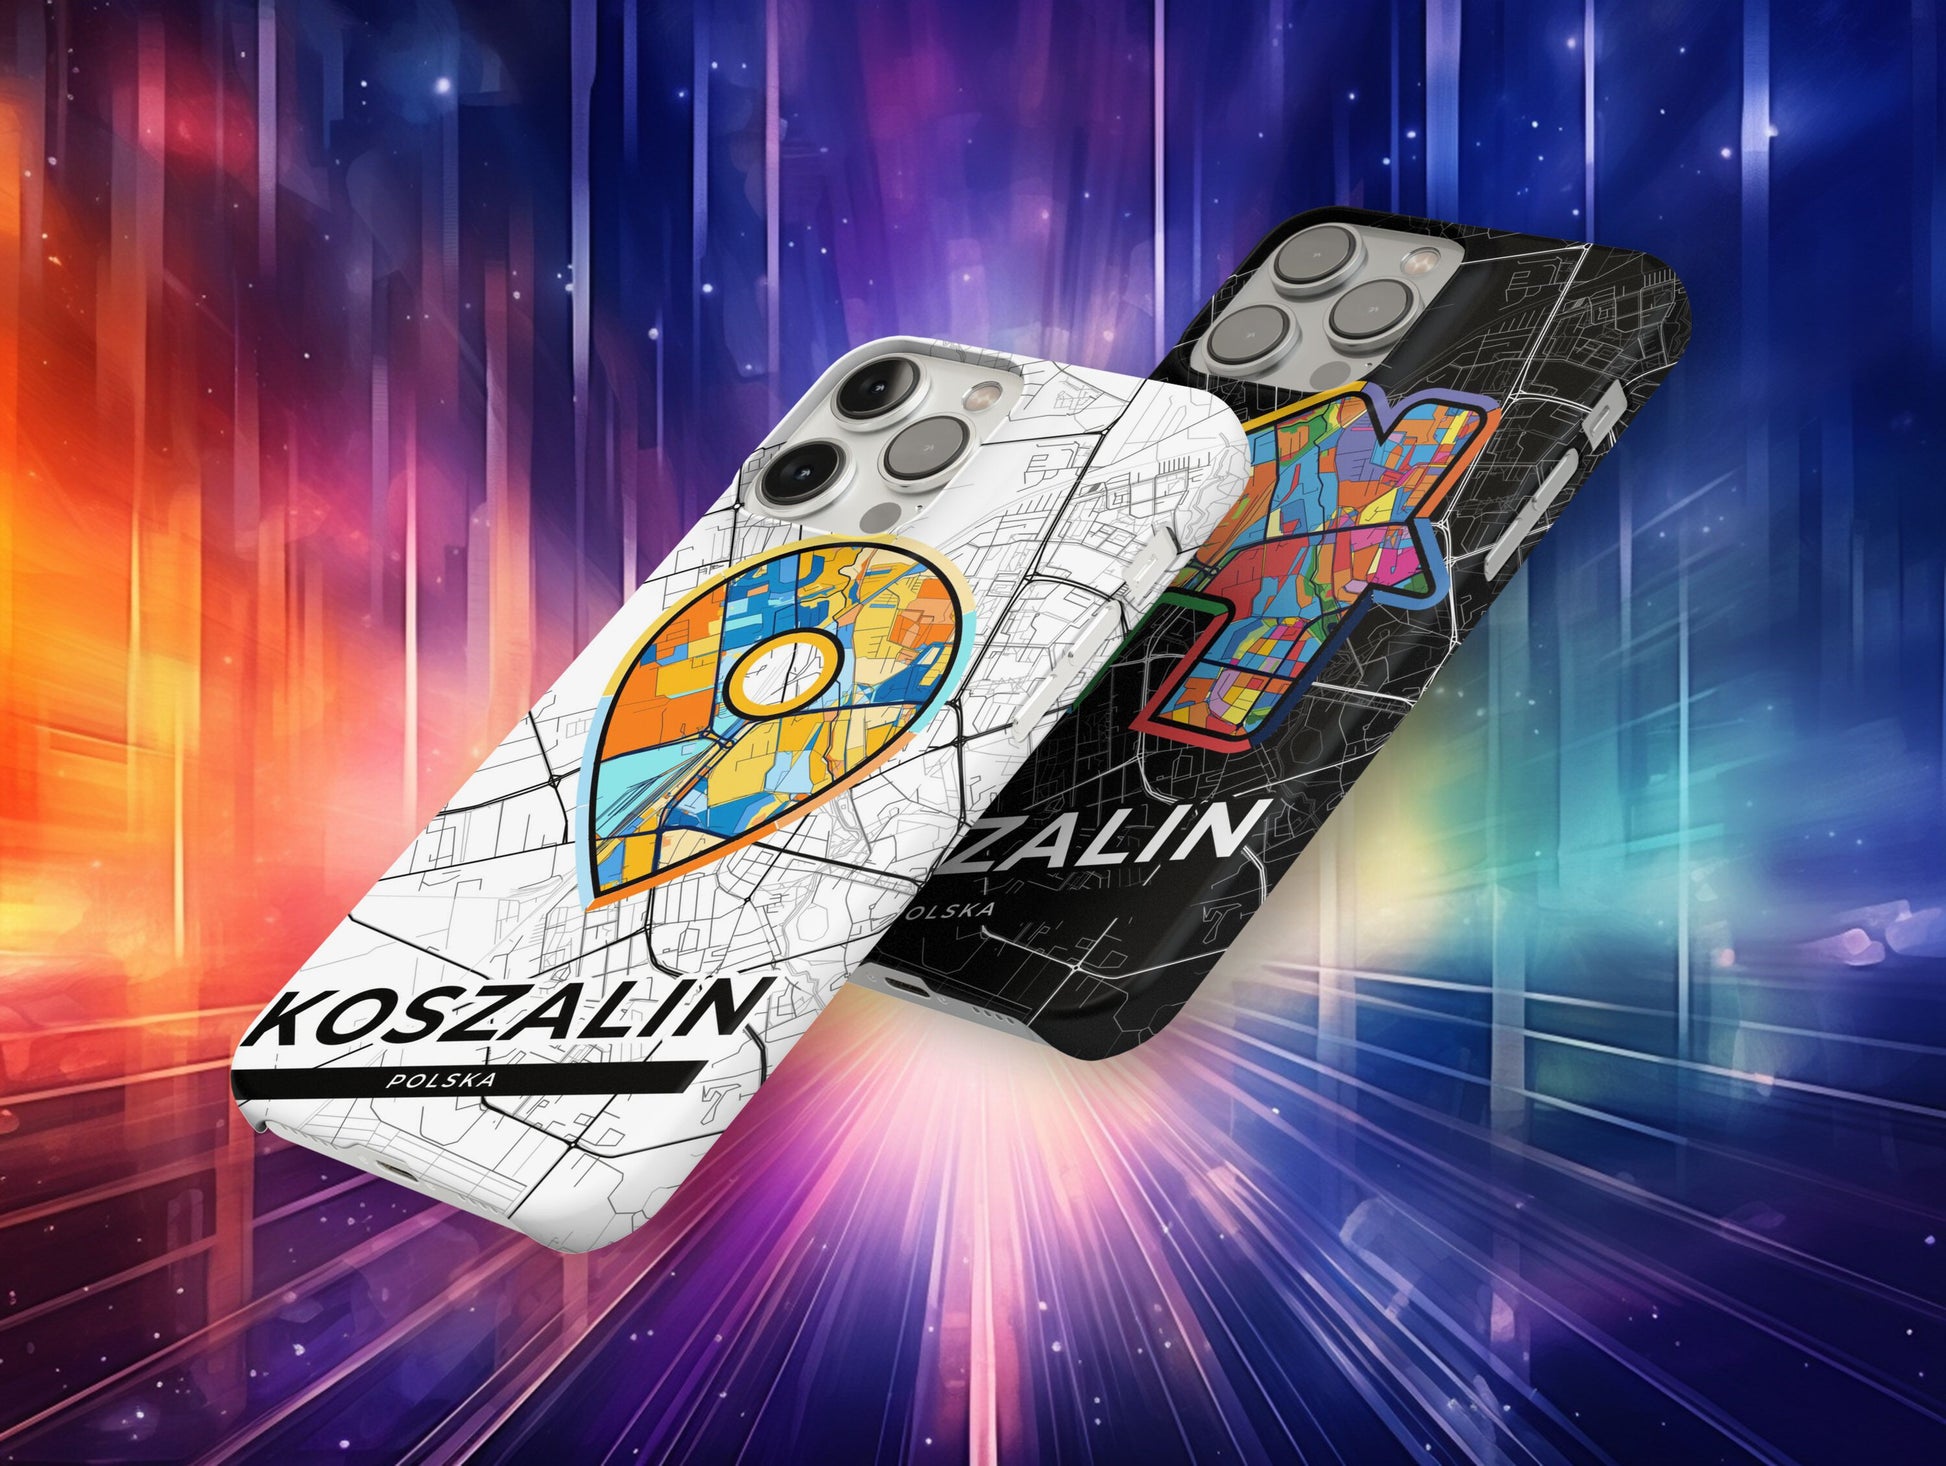 Koszalin Poland slim phone case with colorful icon. Birthday, wedding or housewarming gift. Couple match cases.